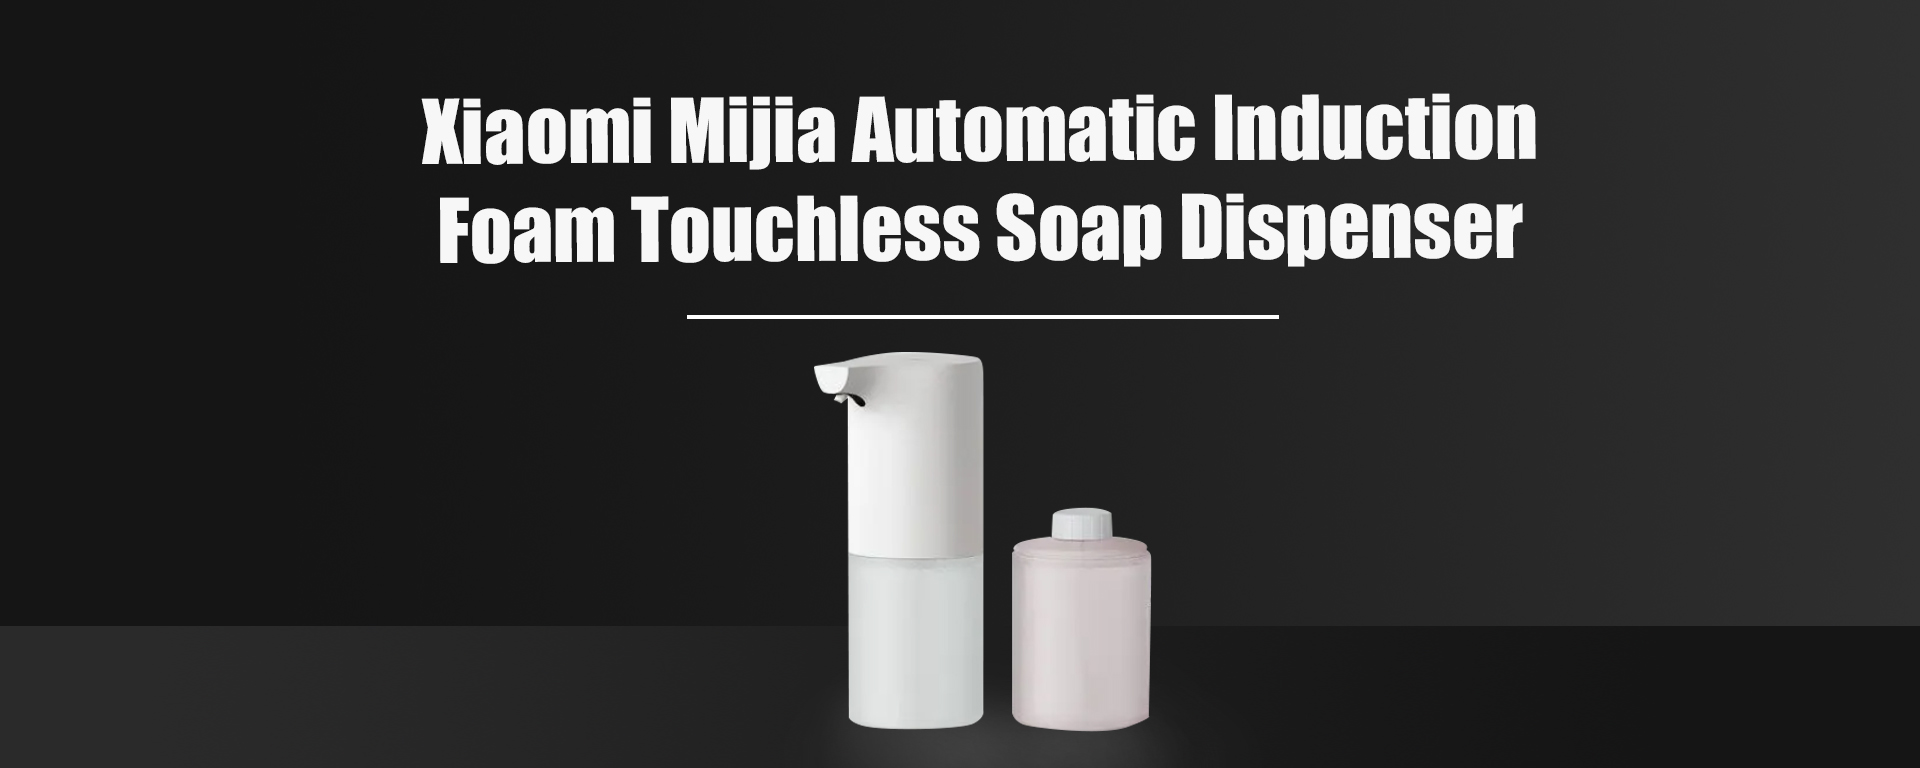 Xiaomi Mijia Automatic Induction Foam Touchless Soap Dispenser 